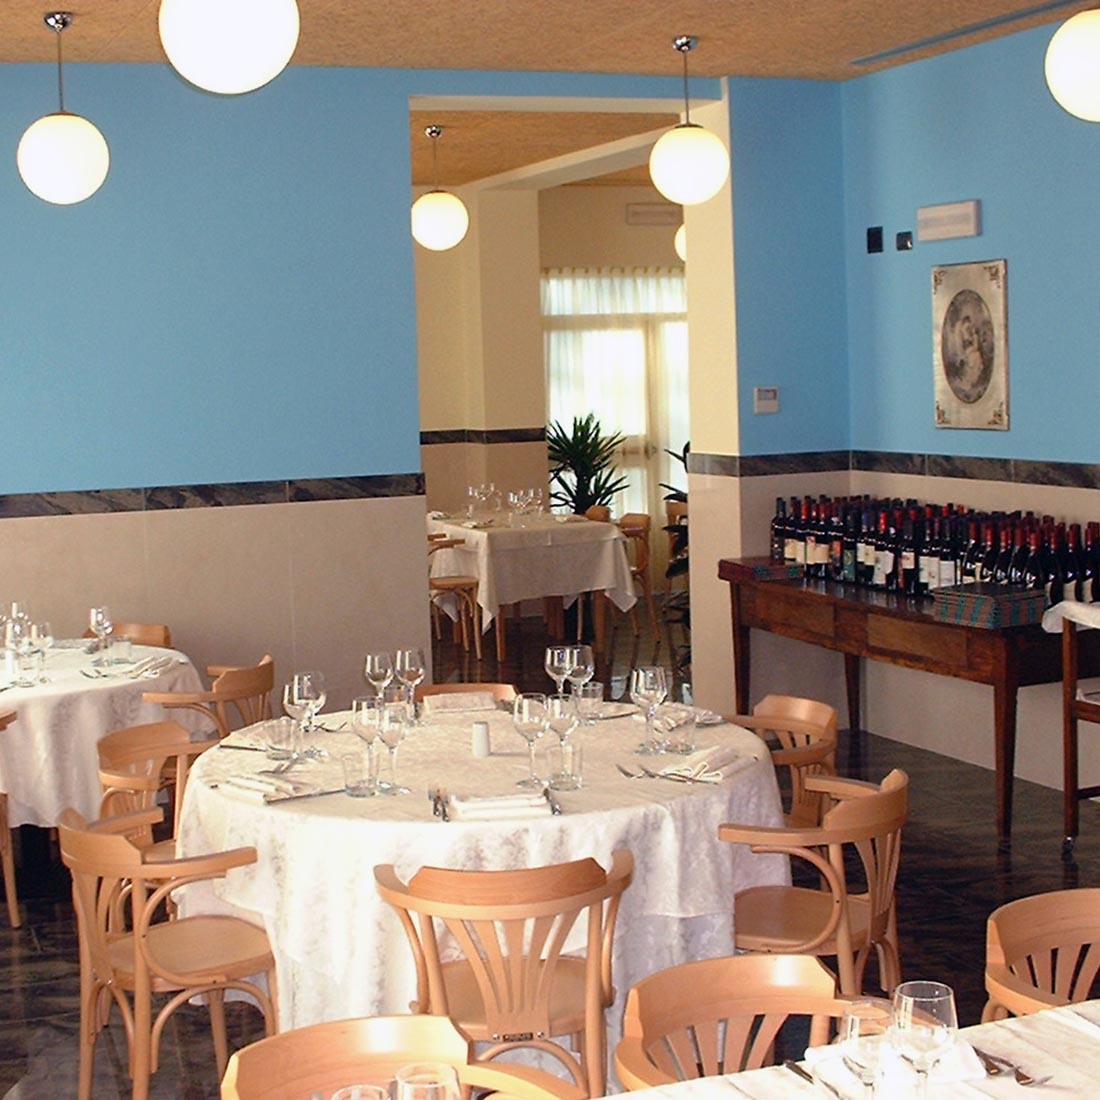 Restaurant Campo delle stelle in Vanzago - The hall